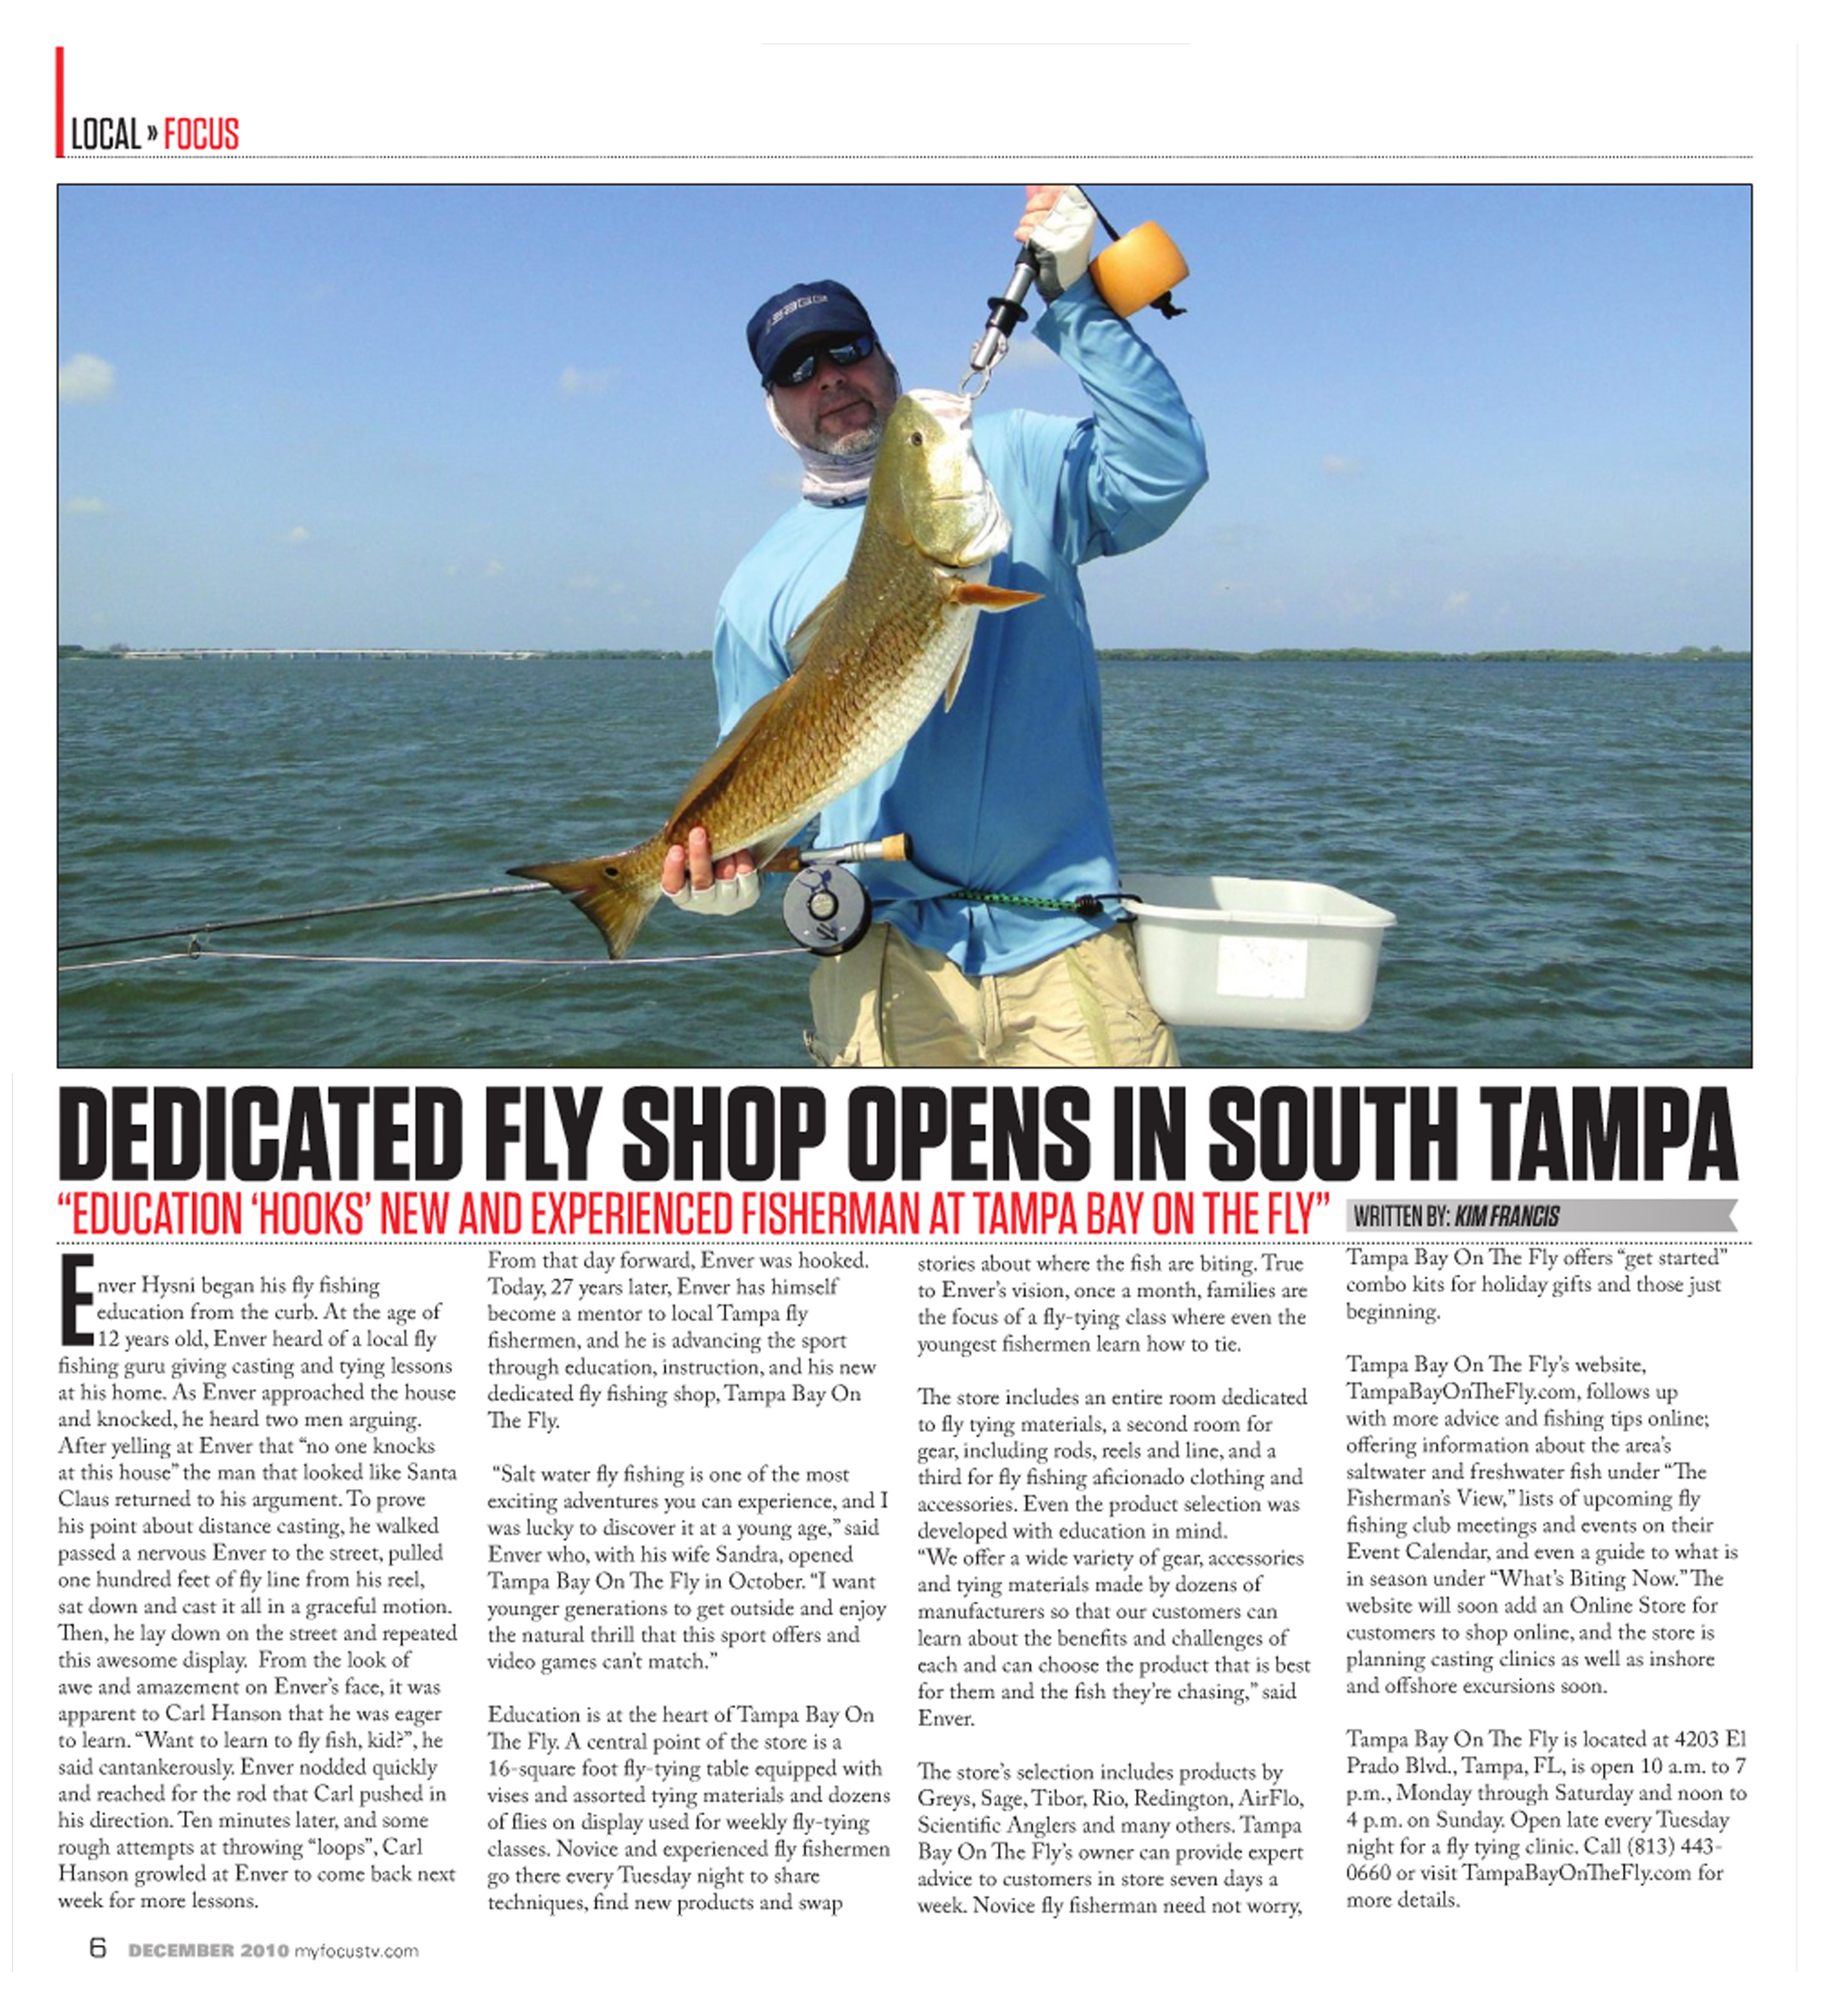 South Tampa Magazine